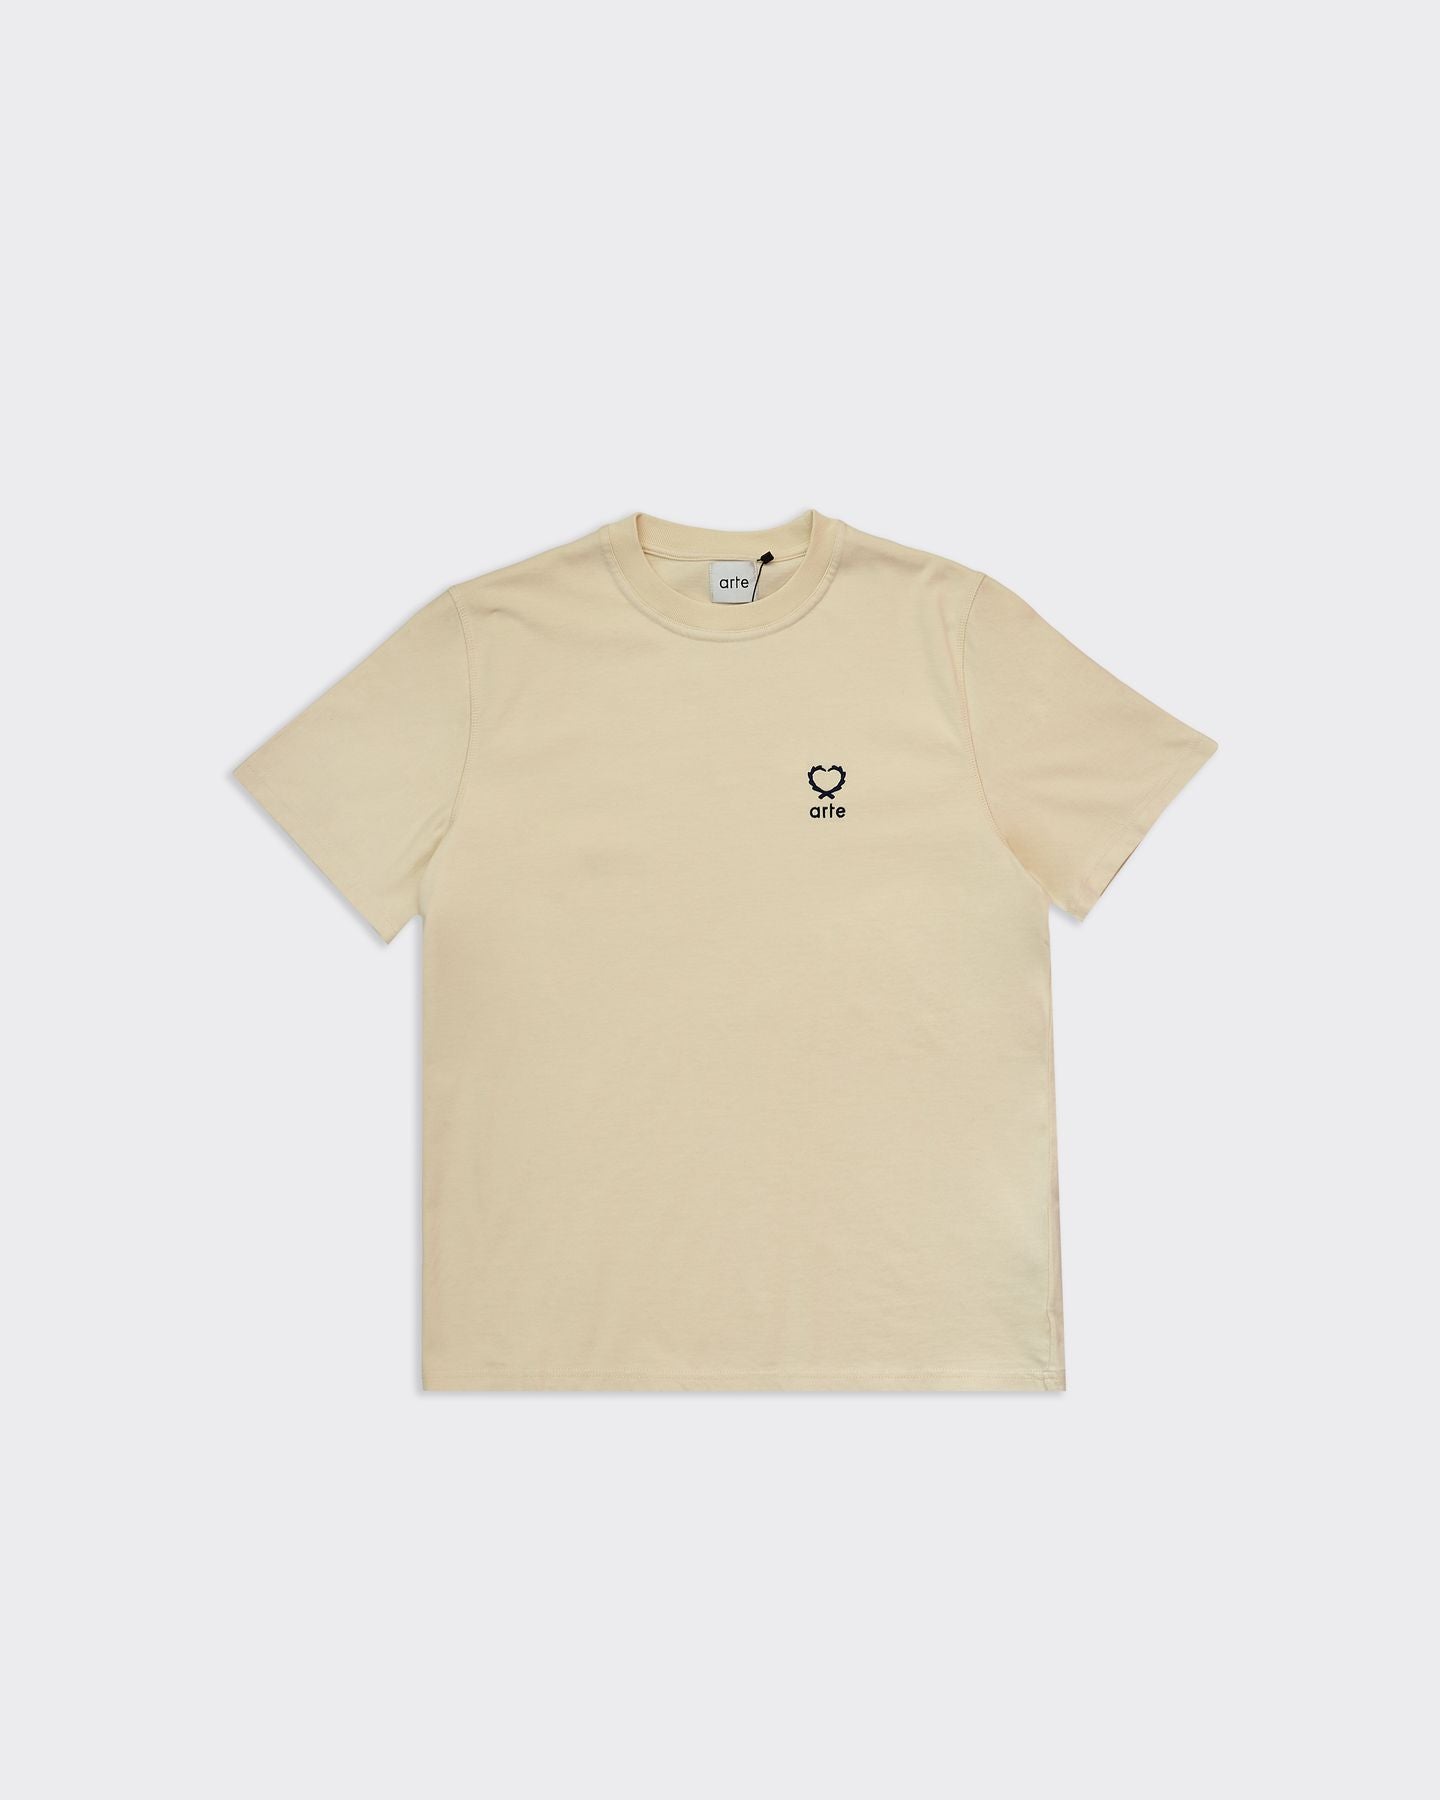 Teo Small Heart Cream T-Shirt